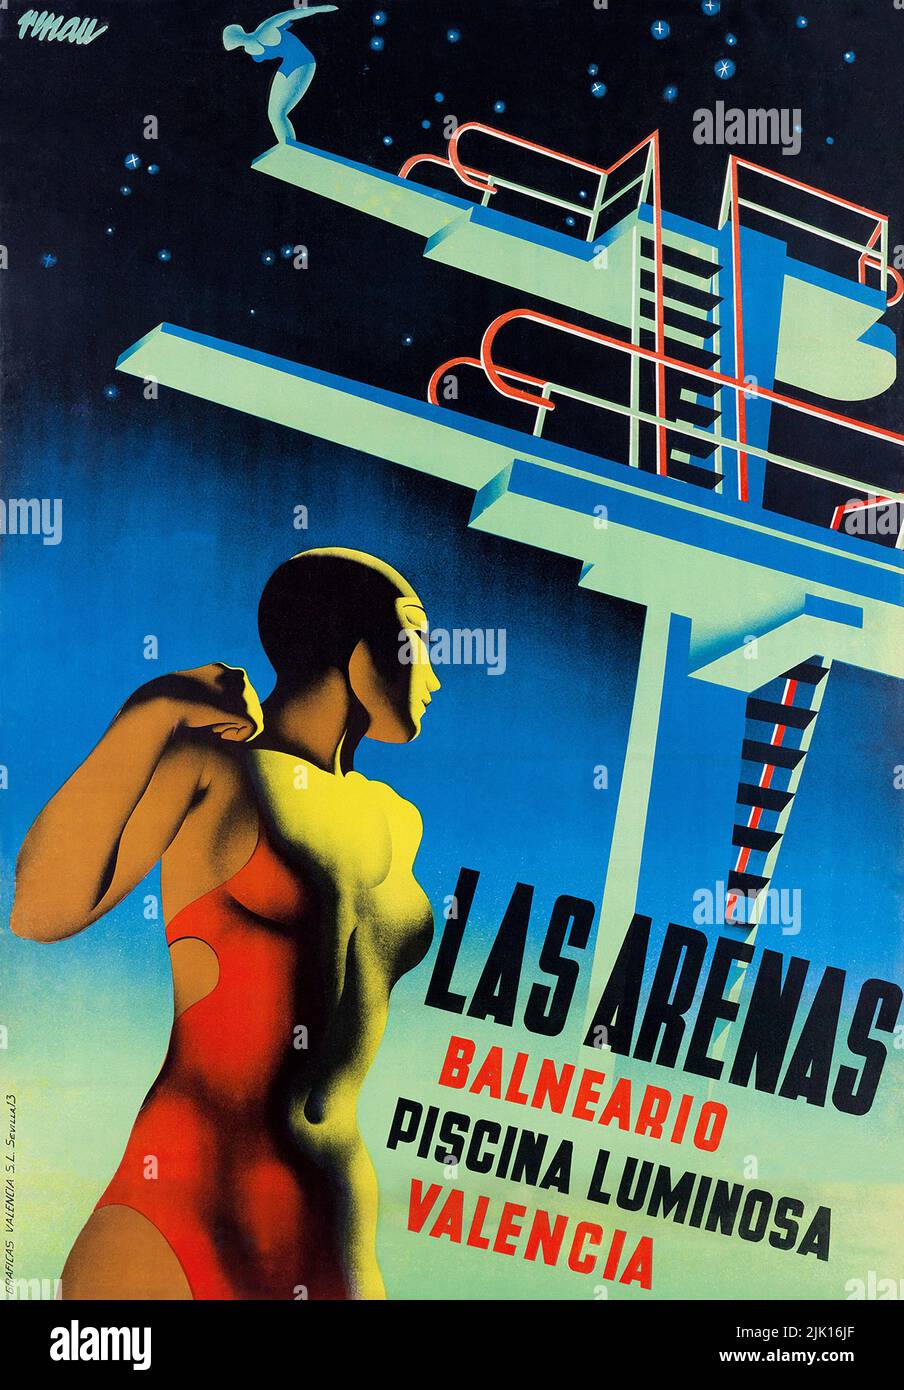 Vintage Art Deco Travel Poster - Valencia LAS ARENAS BALNEARIO PISCINA LUMINOSA. 1932. Stock Photo